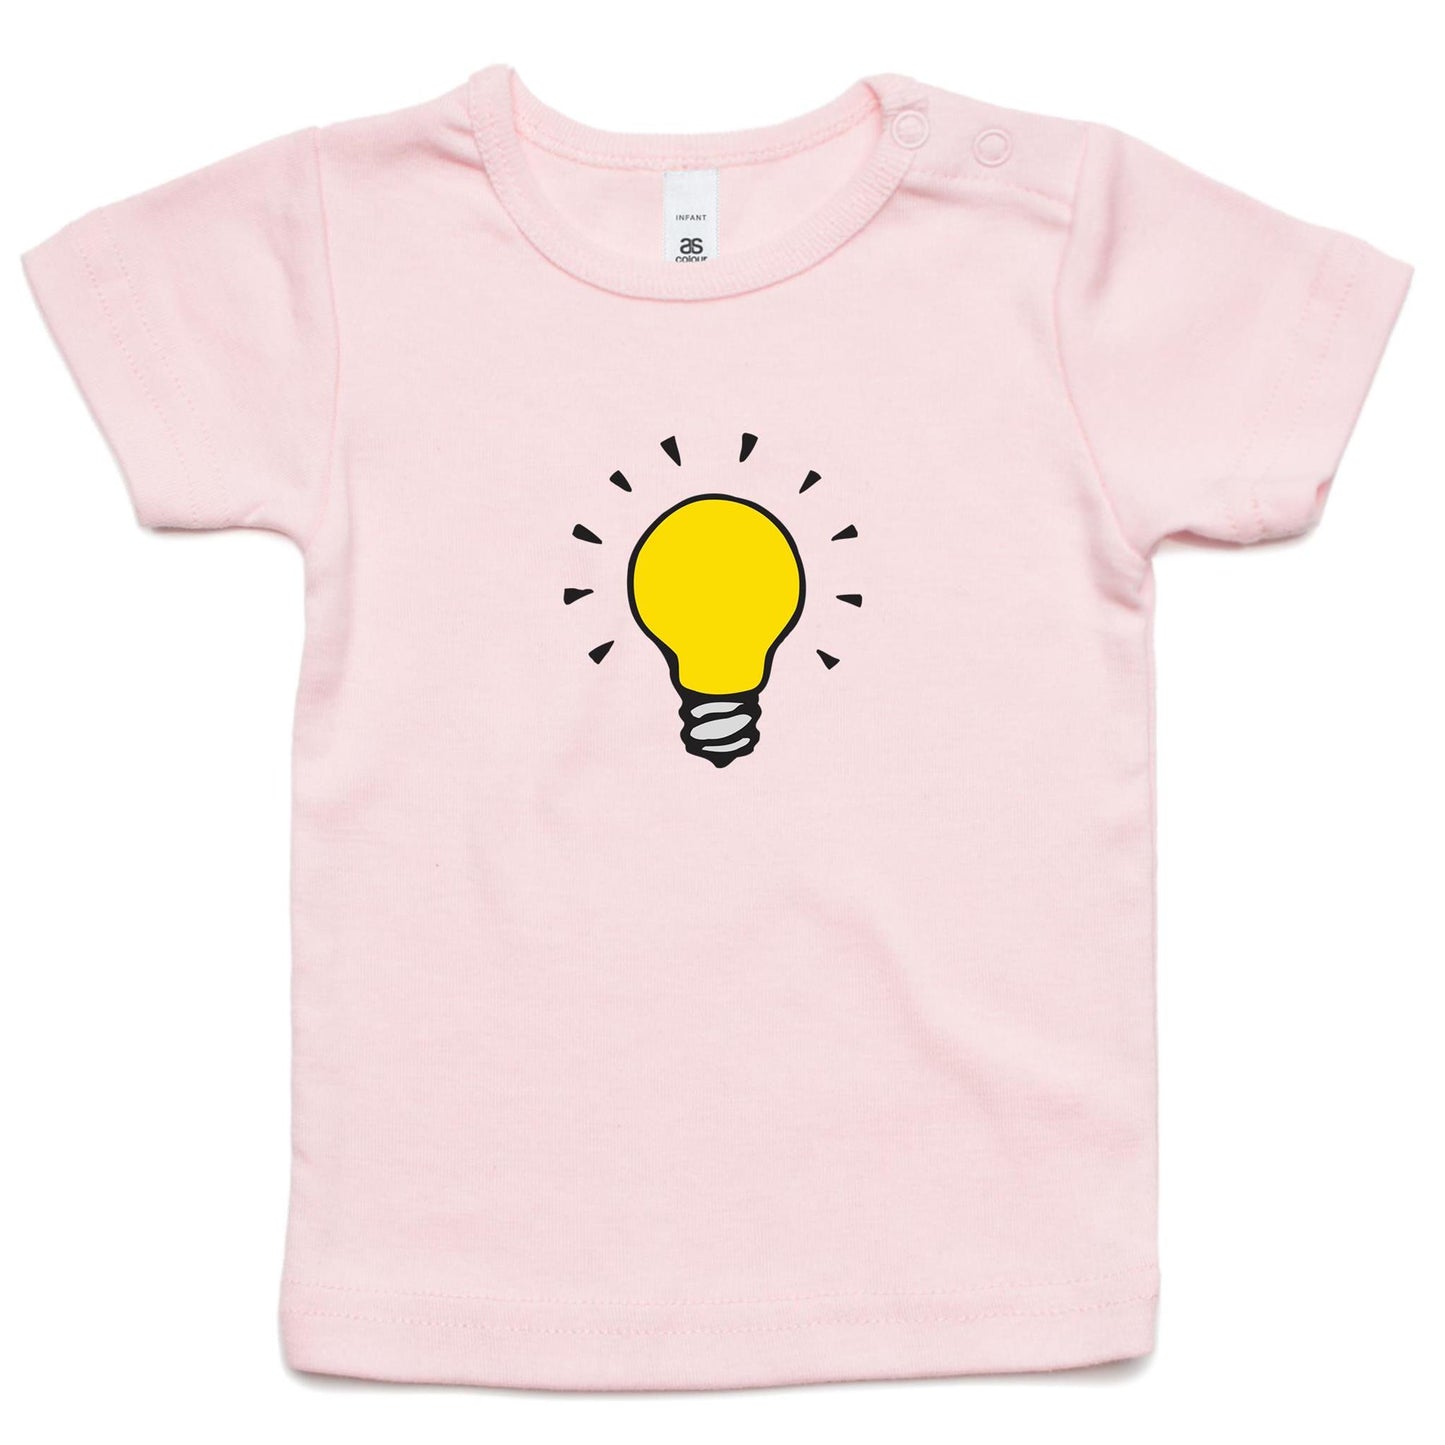 Light Bulb T Shirts for Babies